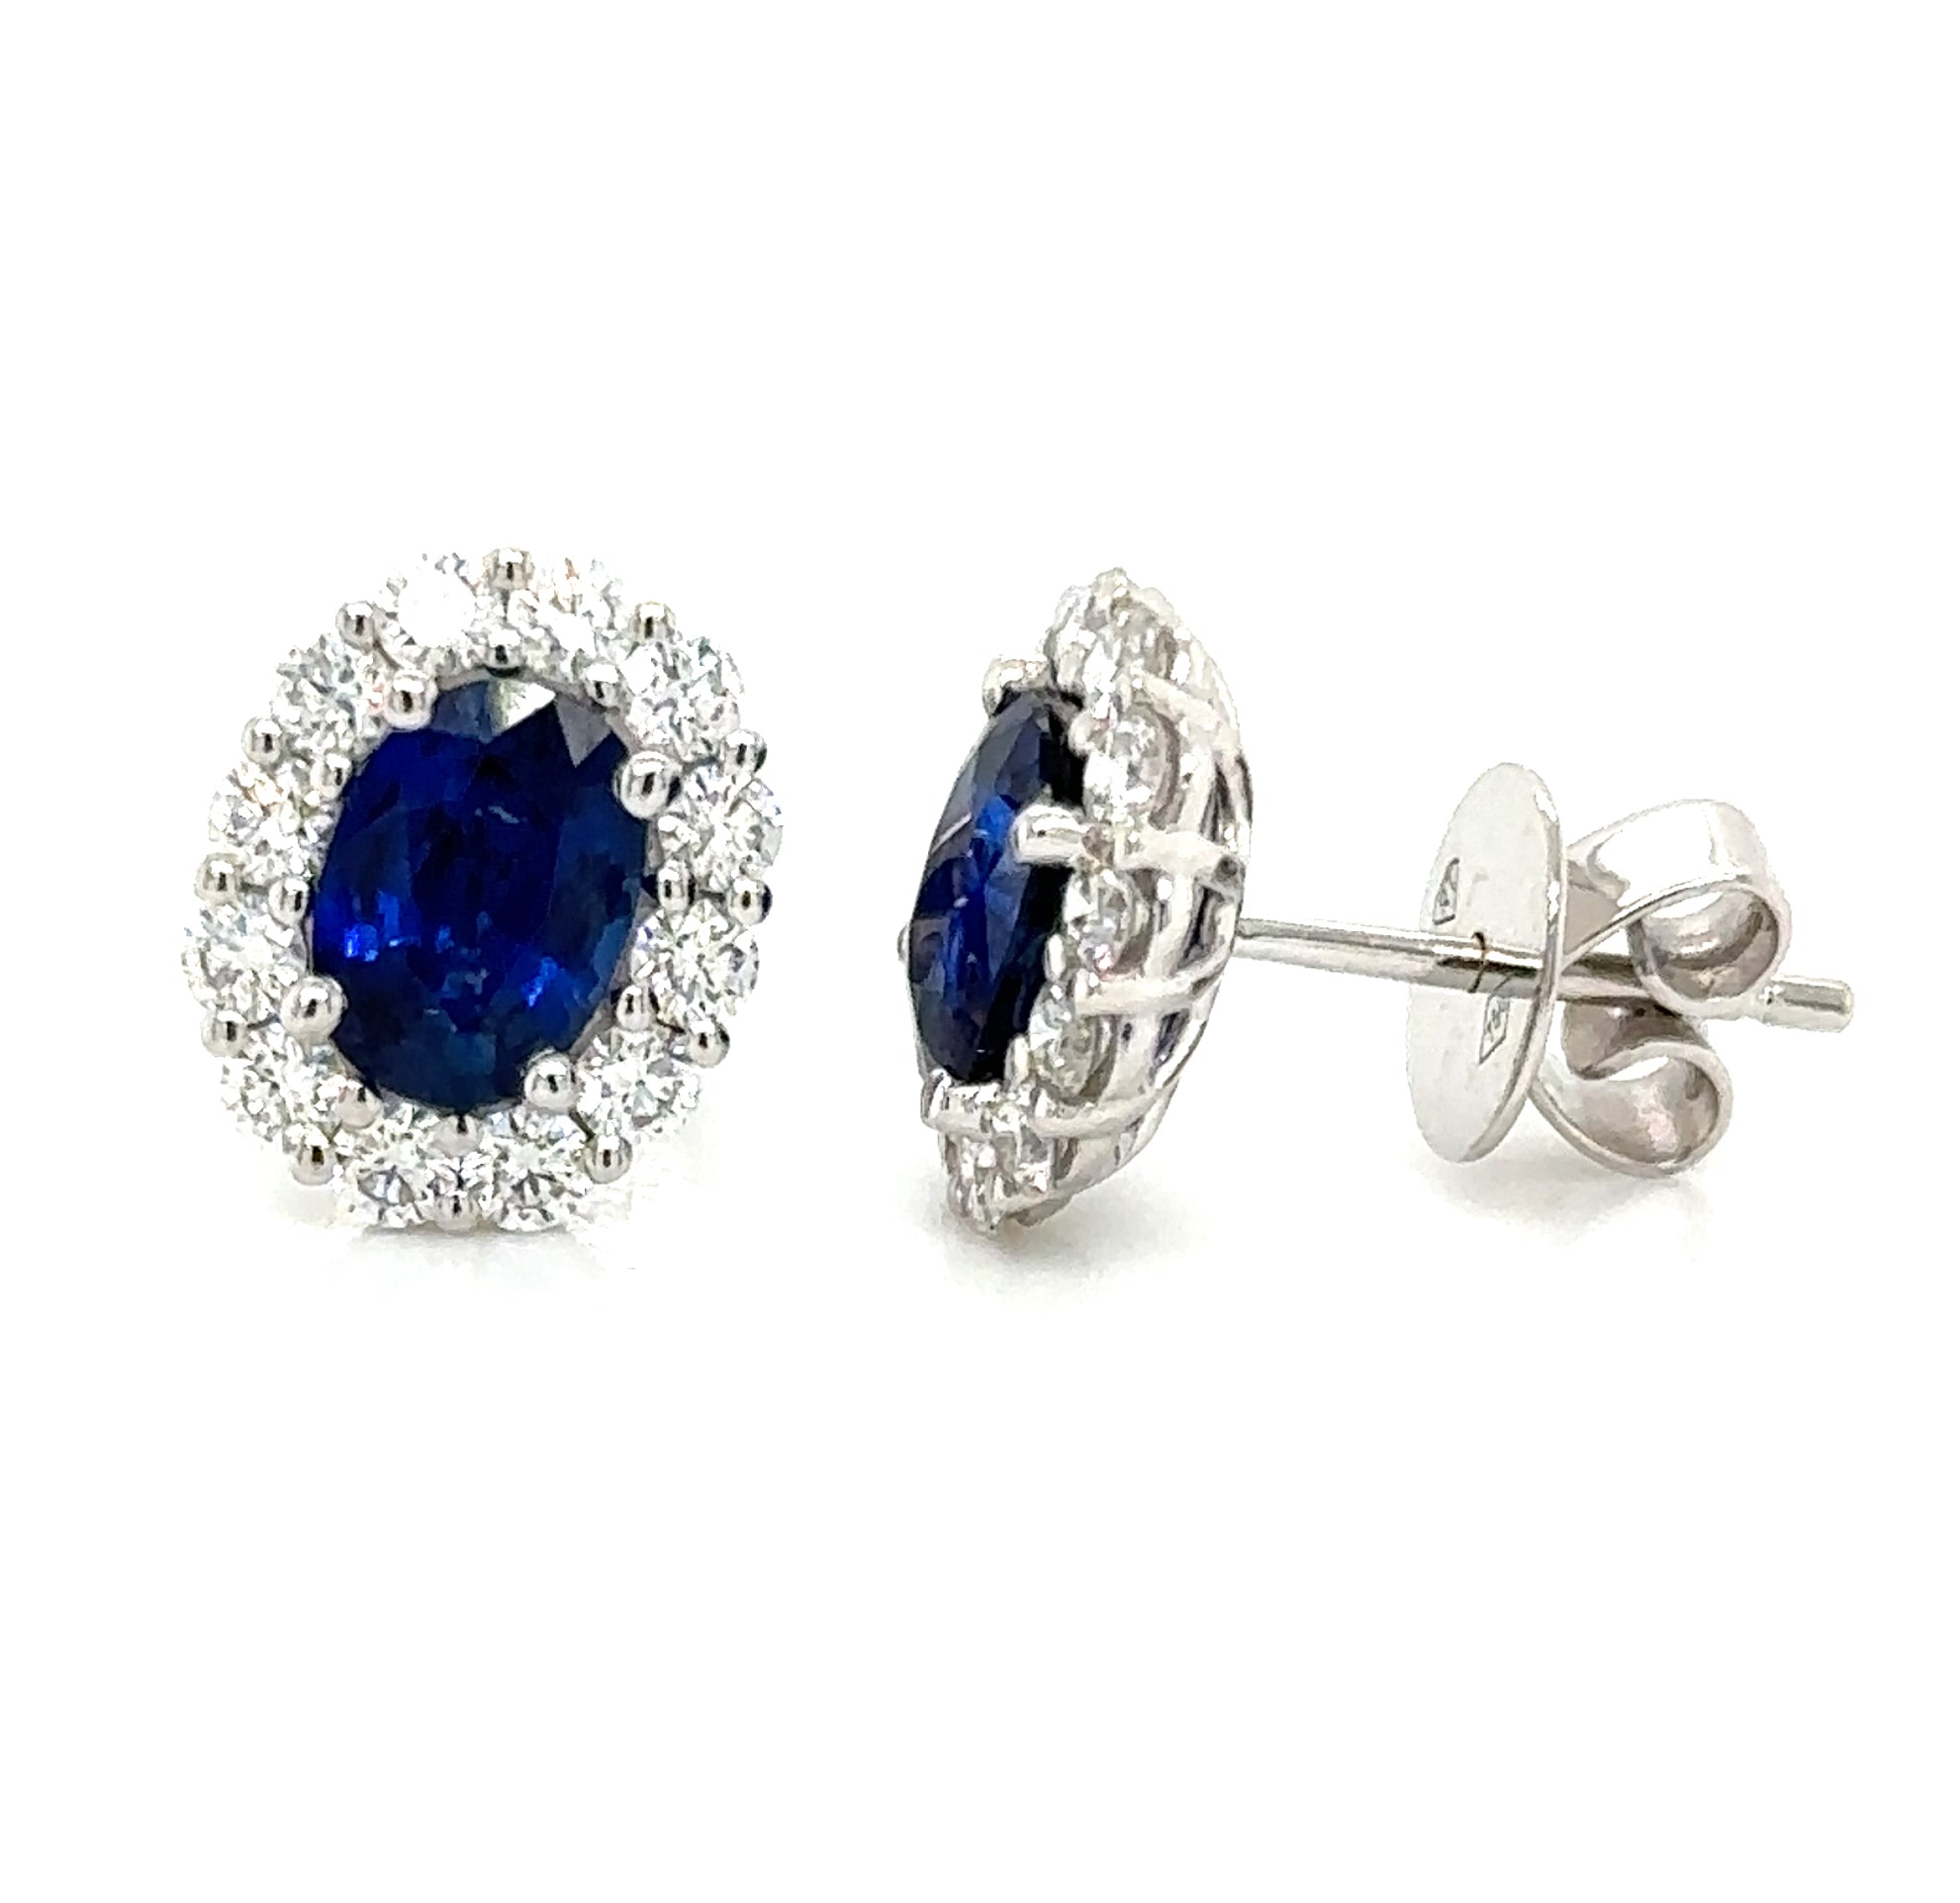 2.62carat Diamond and Blue Sapphire Stud Earrings